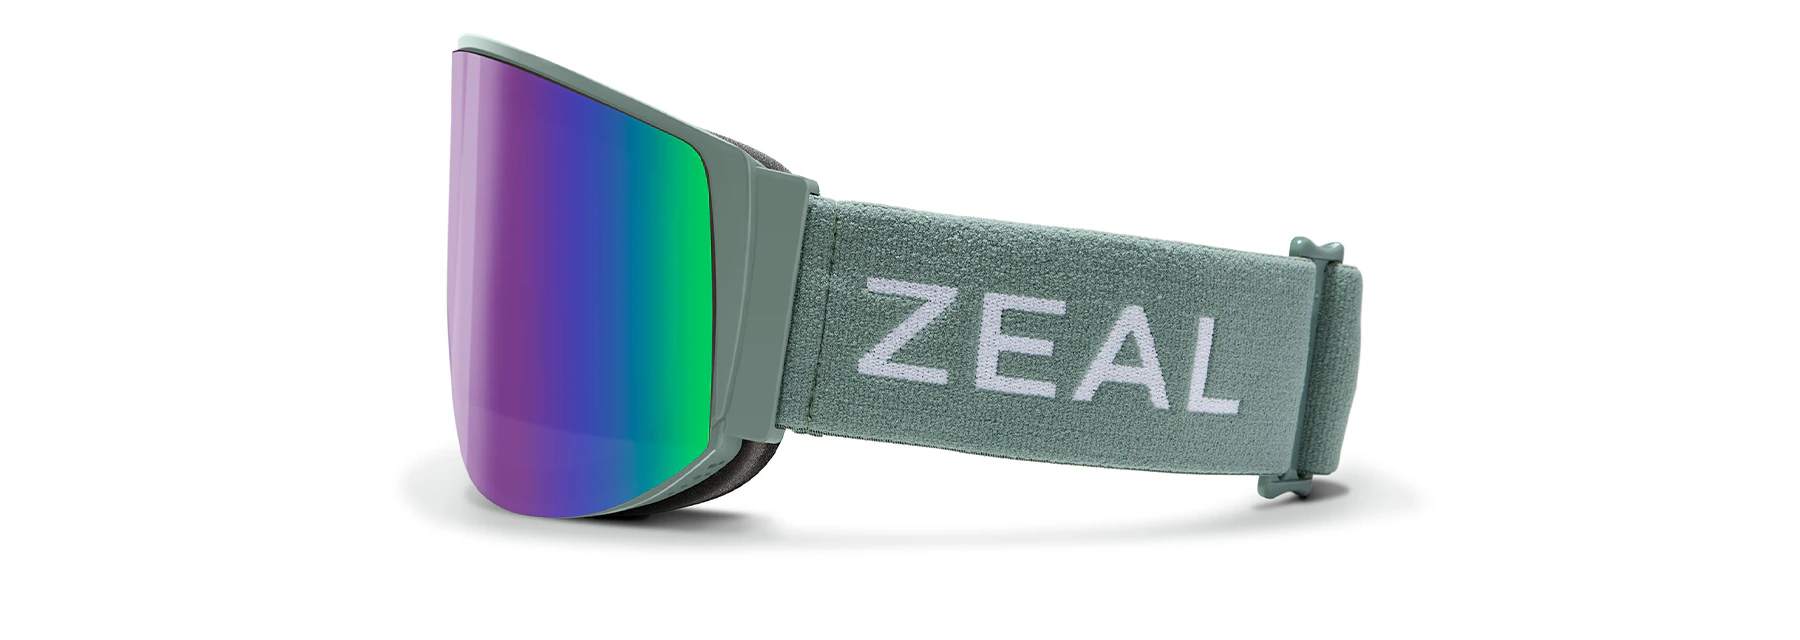 ZEAL OPTICS Zeal Optics Beacon Snow Goggle